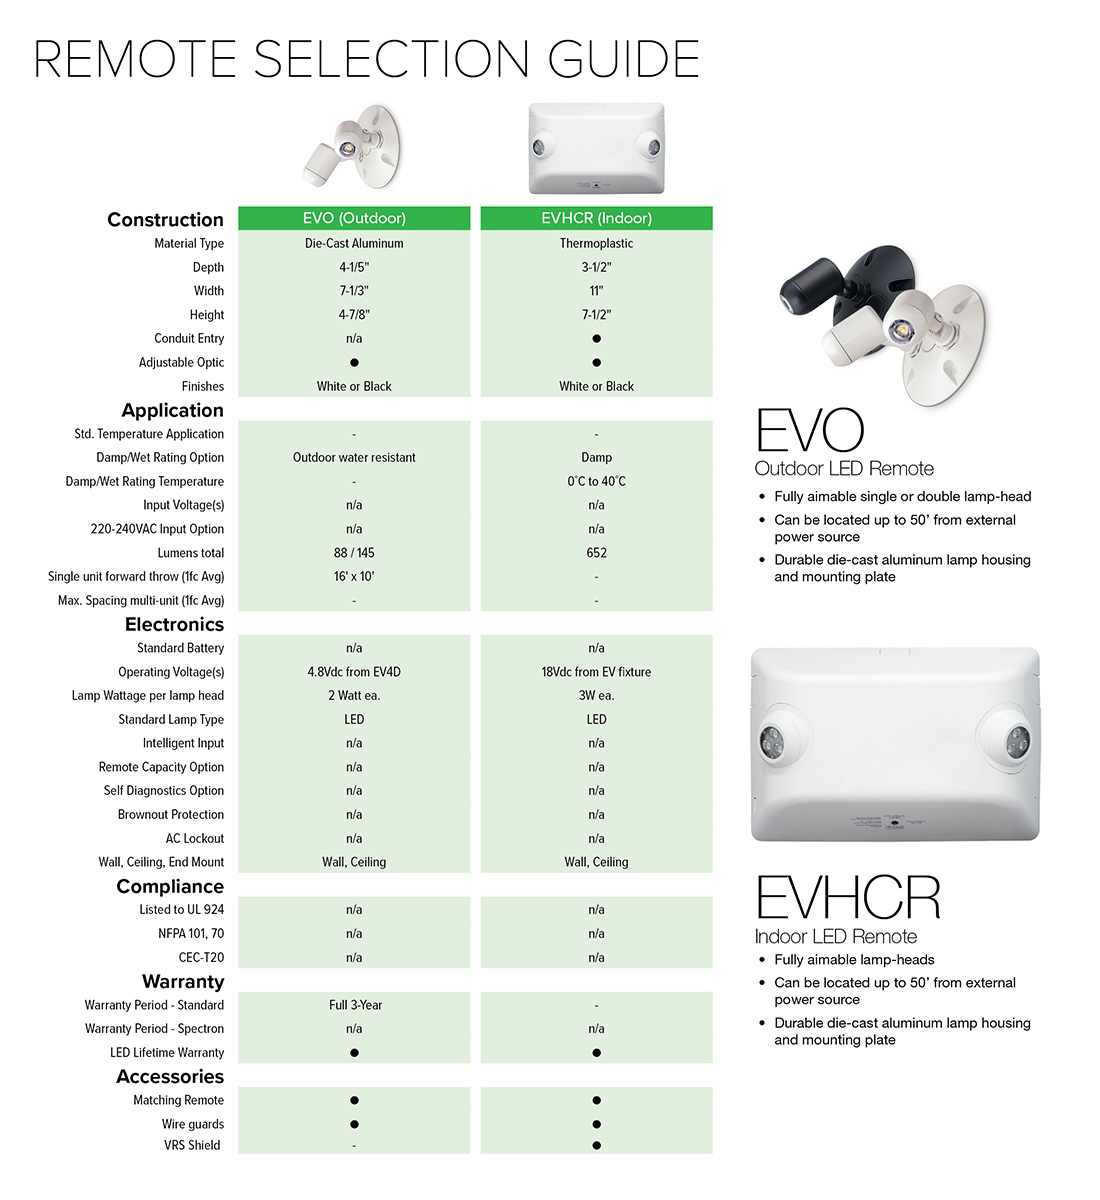 EV Family Remote Selection Guide